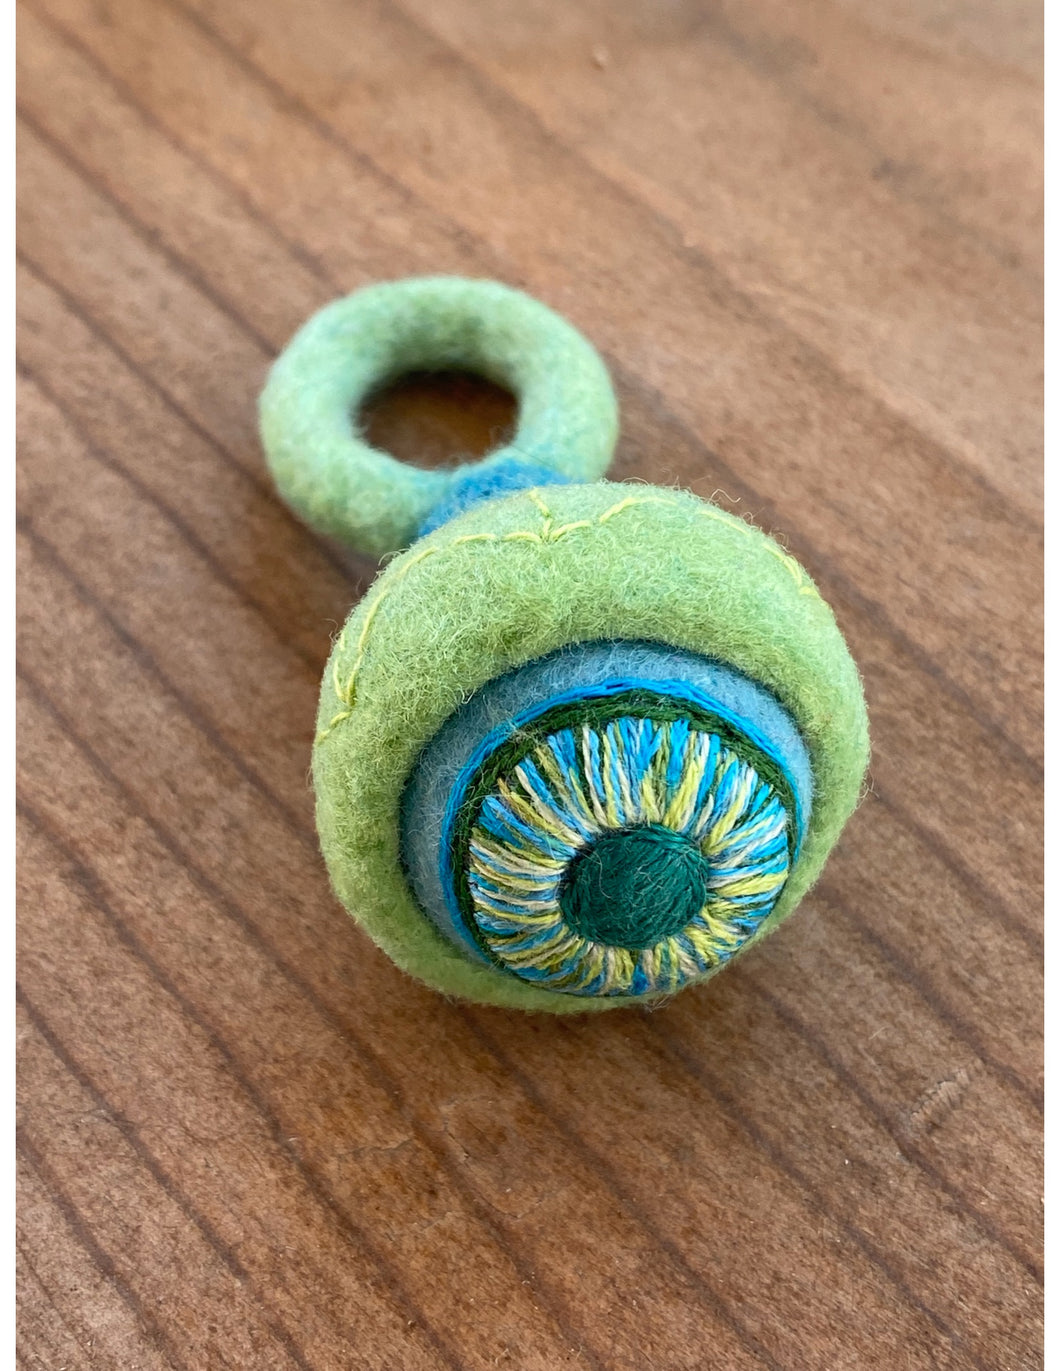 Blue and Green EYEball Ring by Teresa Shields